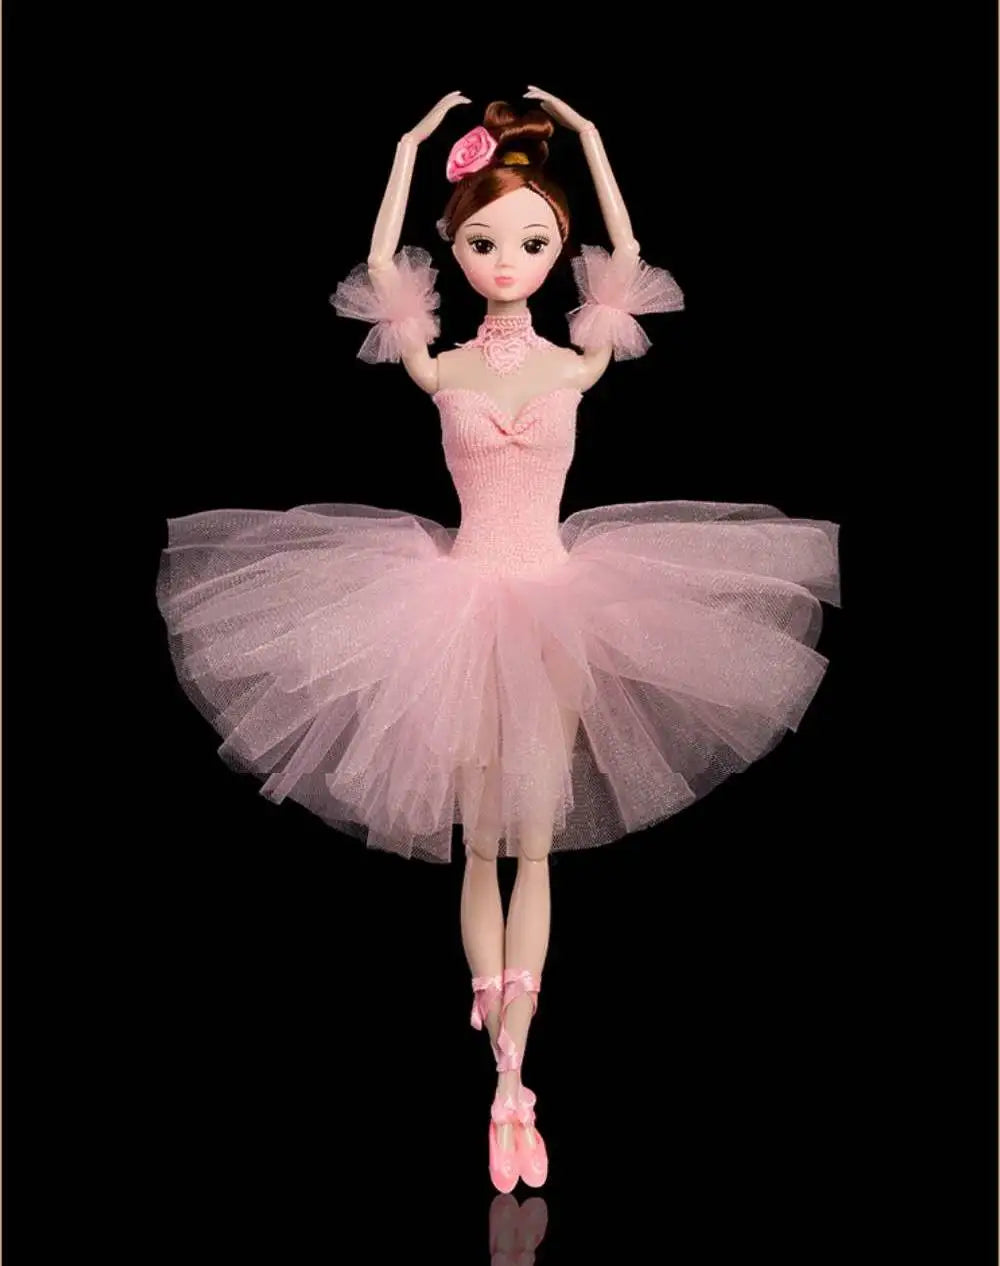 The Sora Ballerina Doll